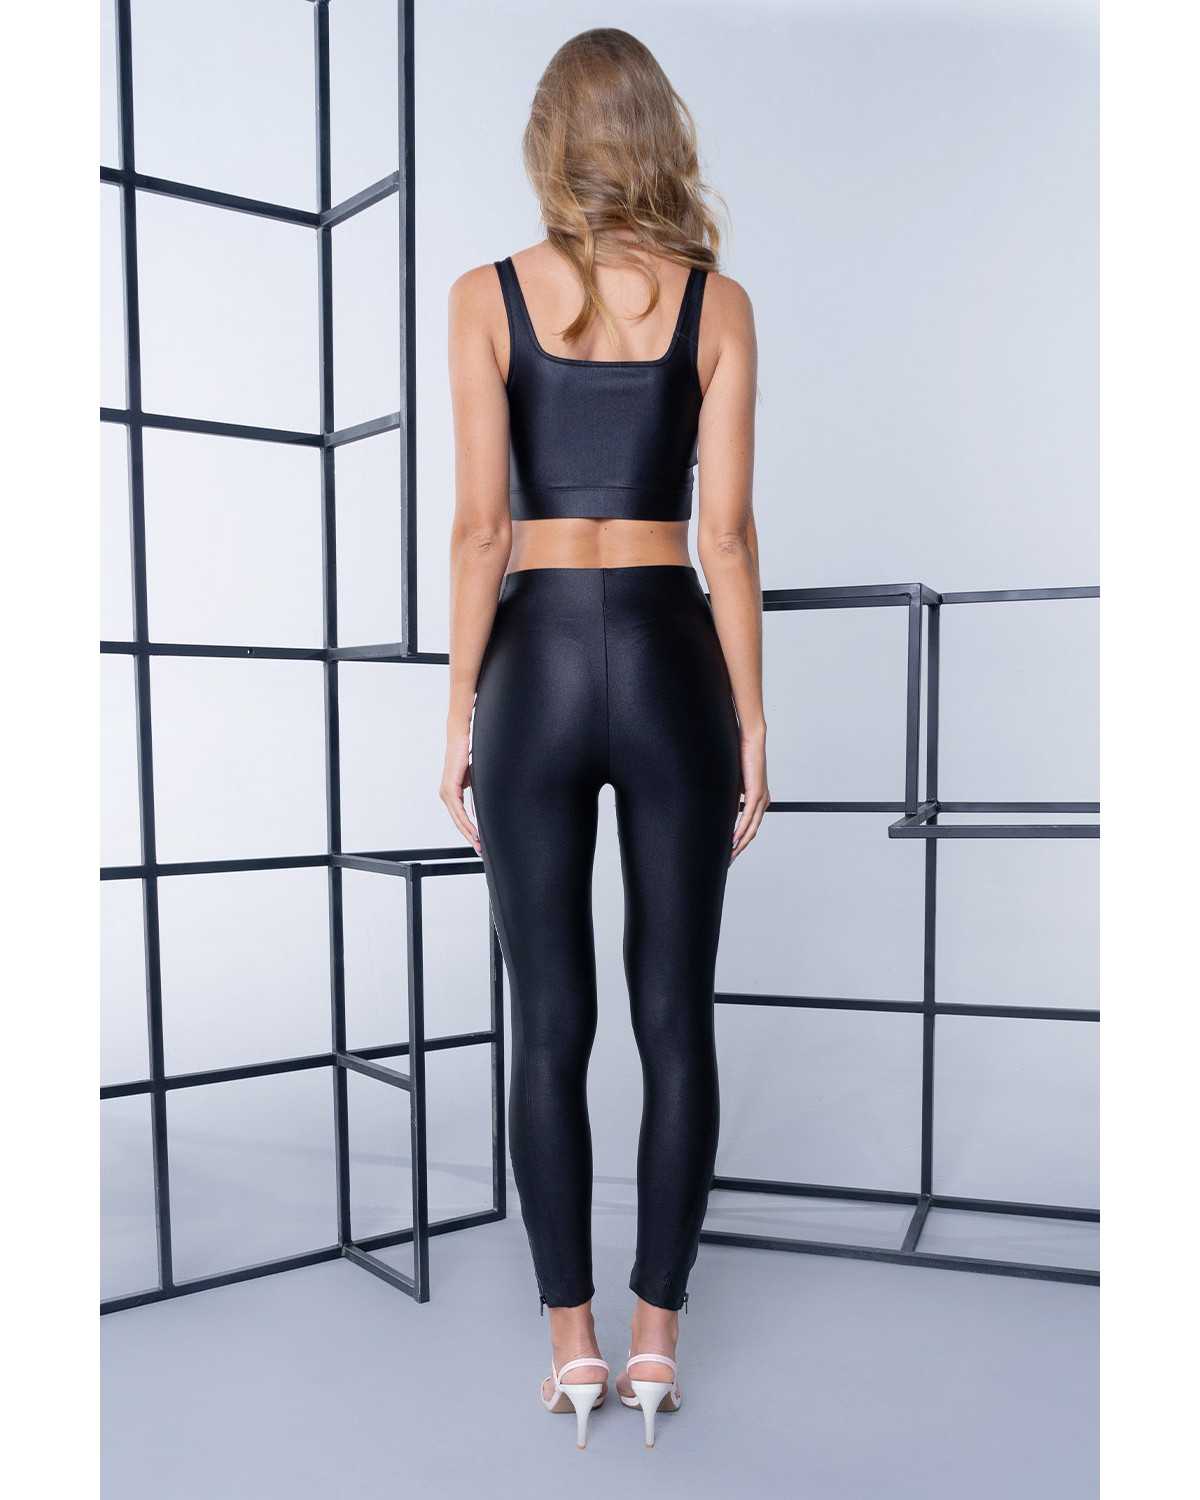 https://www.donnashape.com/89581-large_default/labellamafia-flawless-black-legging.jpg